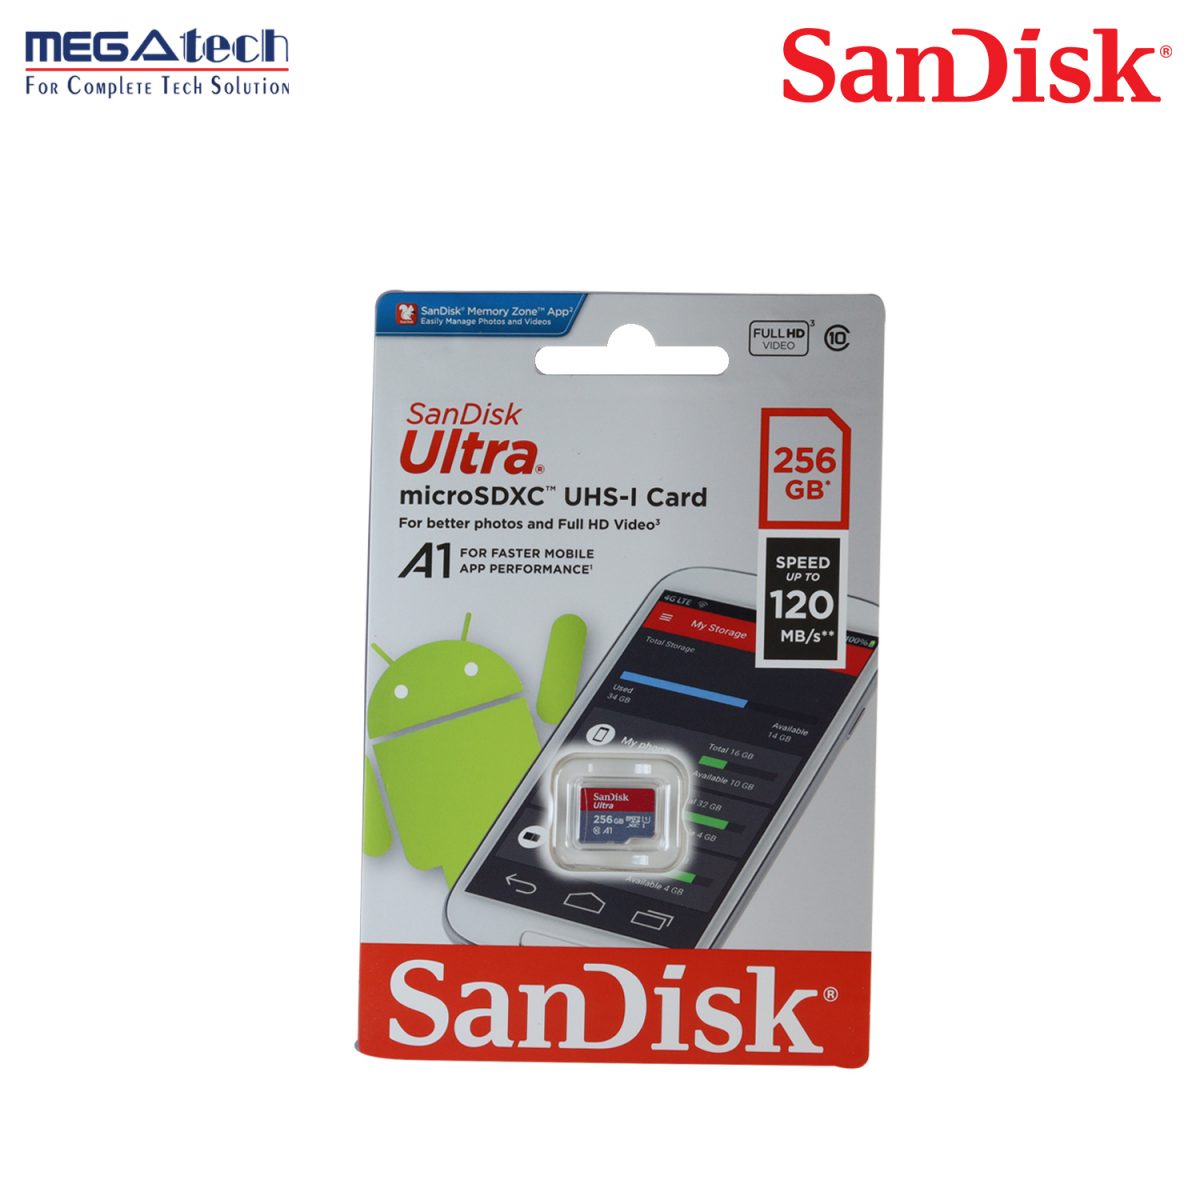 SanDisk 256GB Ultra microSDHC UHS-I Class 10 SD card